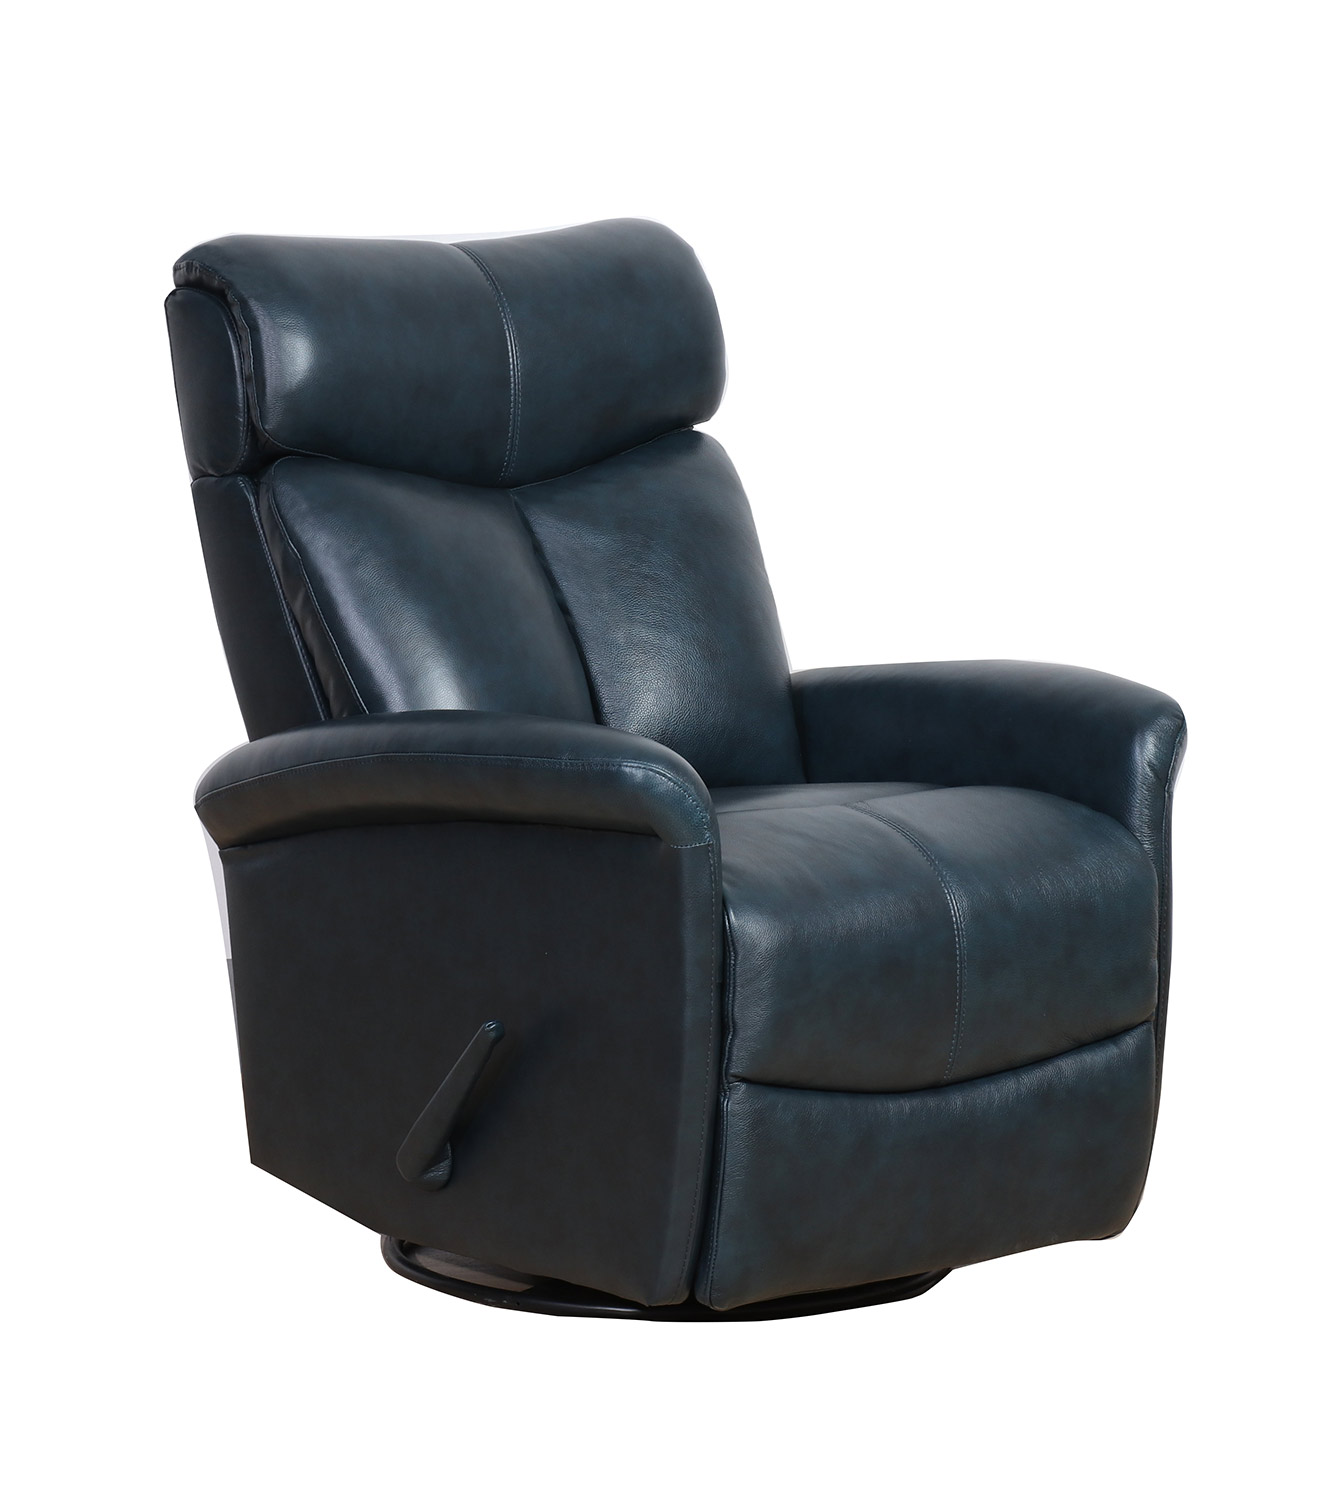 Barcalounger Diego Swivel Glider Recliner Chair - Ryegate Sapphire Blue/Leather Match